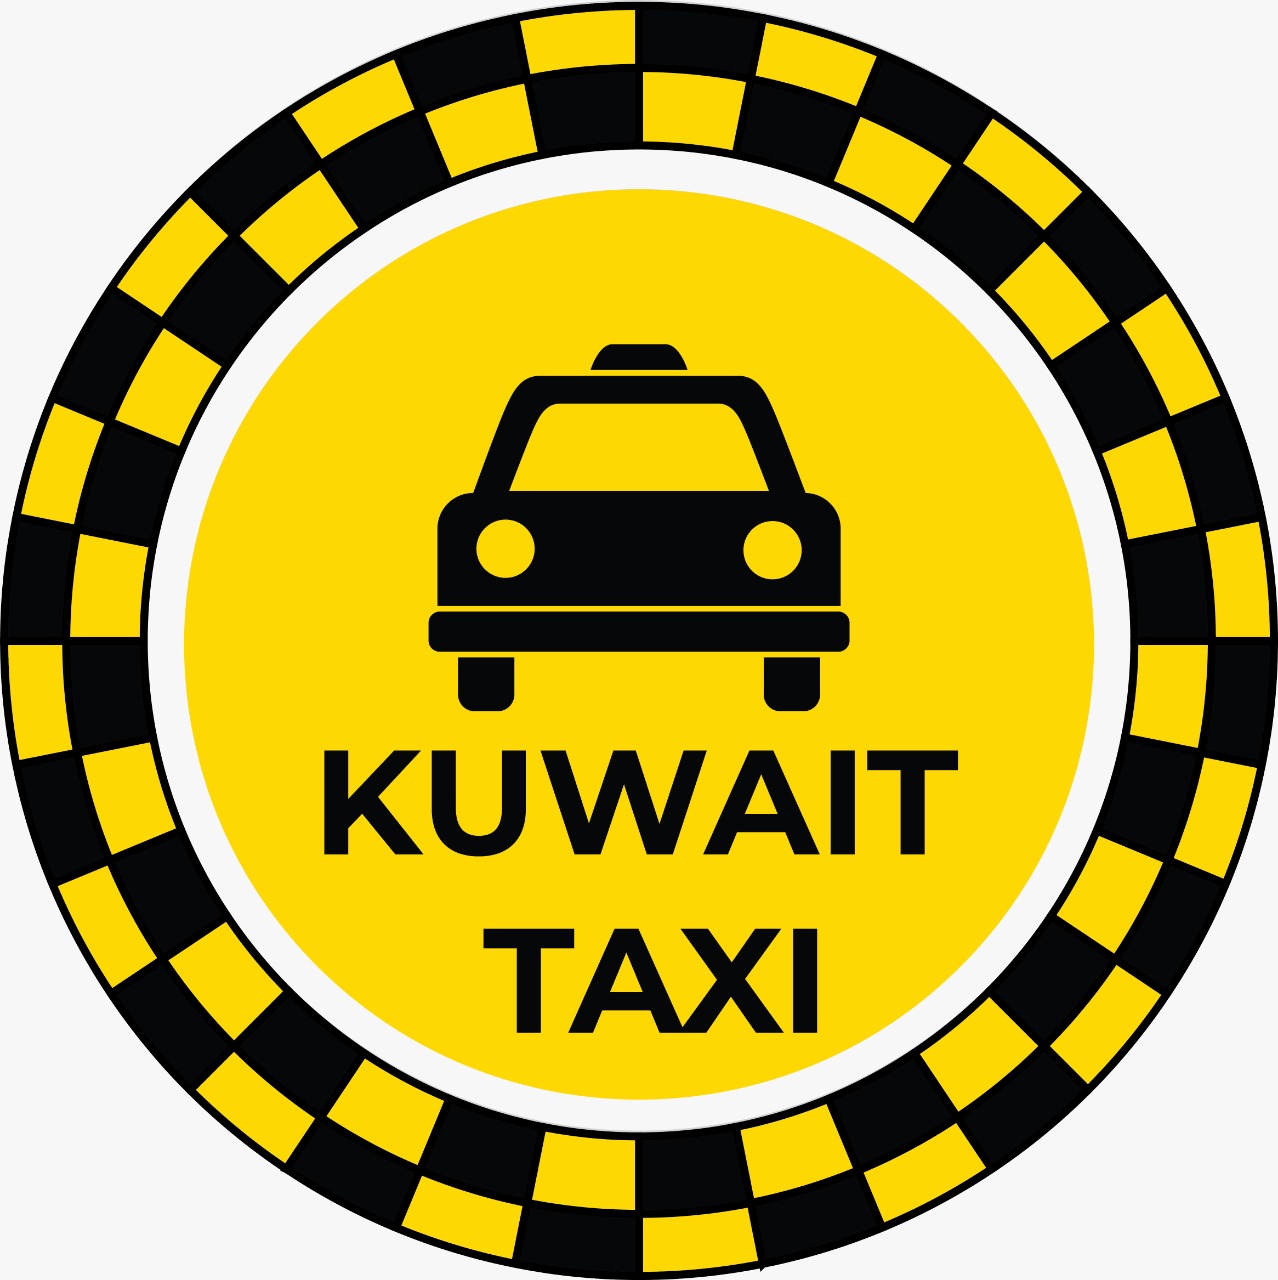 Rumaithiya Taxi Number - Rumaithiya Taxi Kuwait